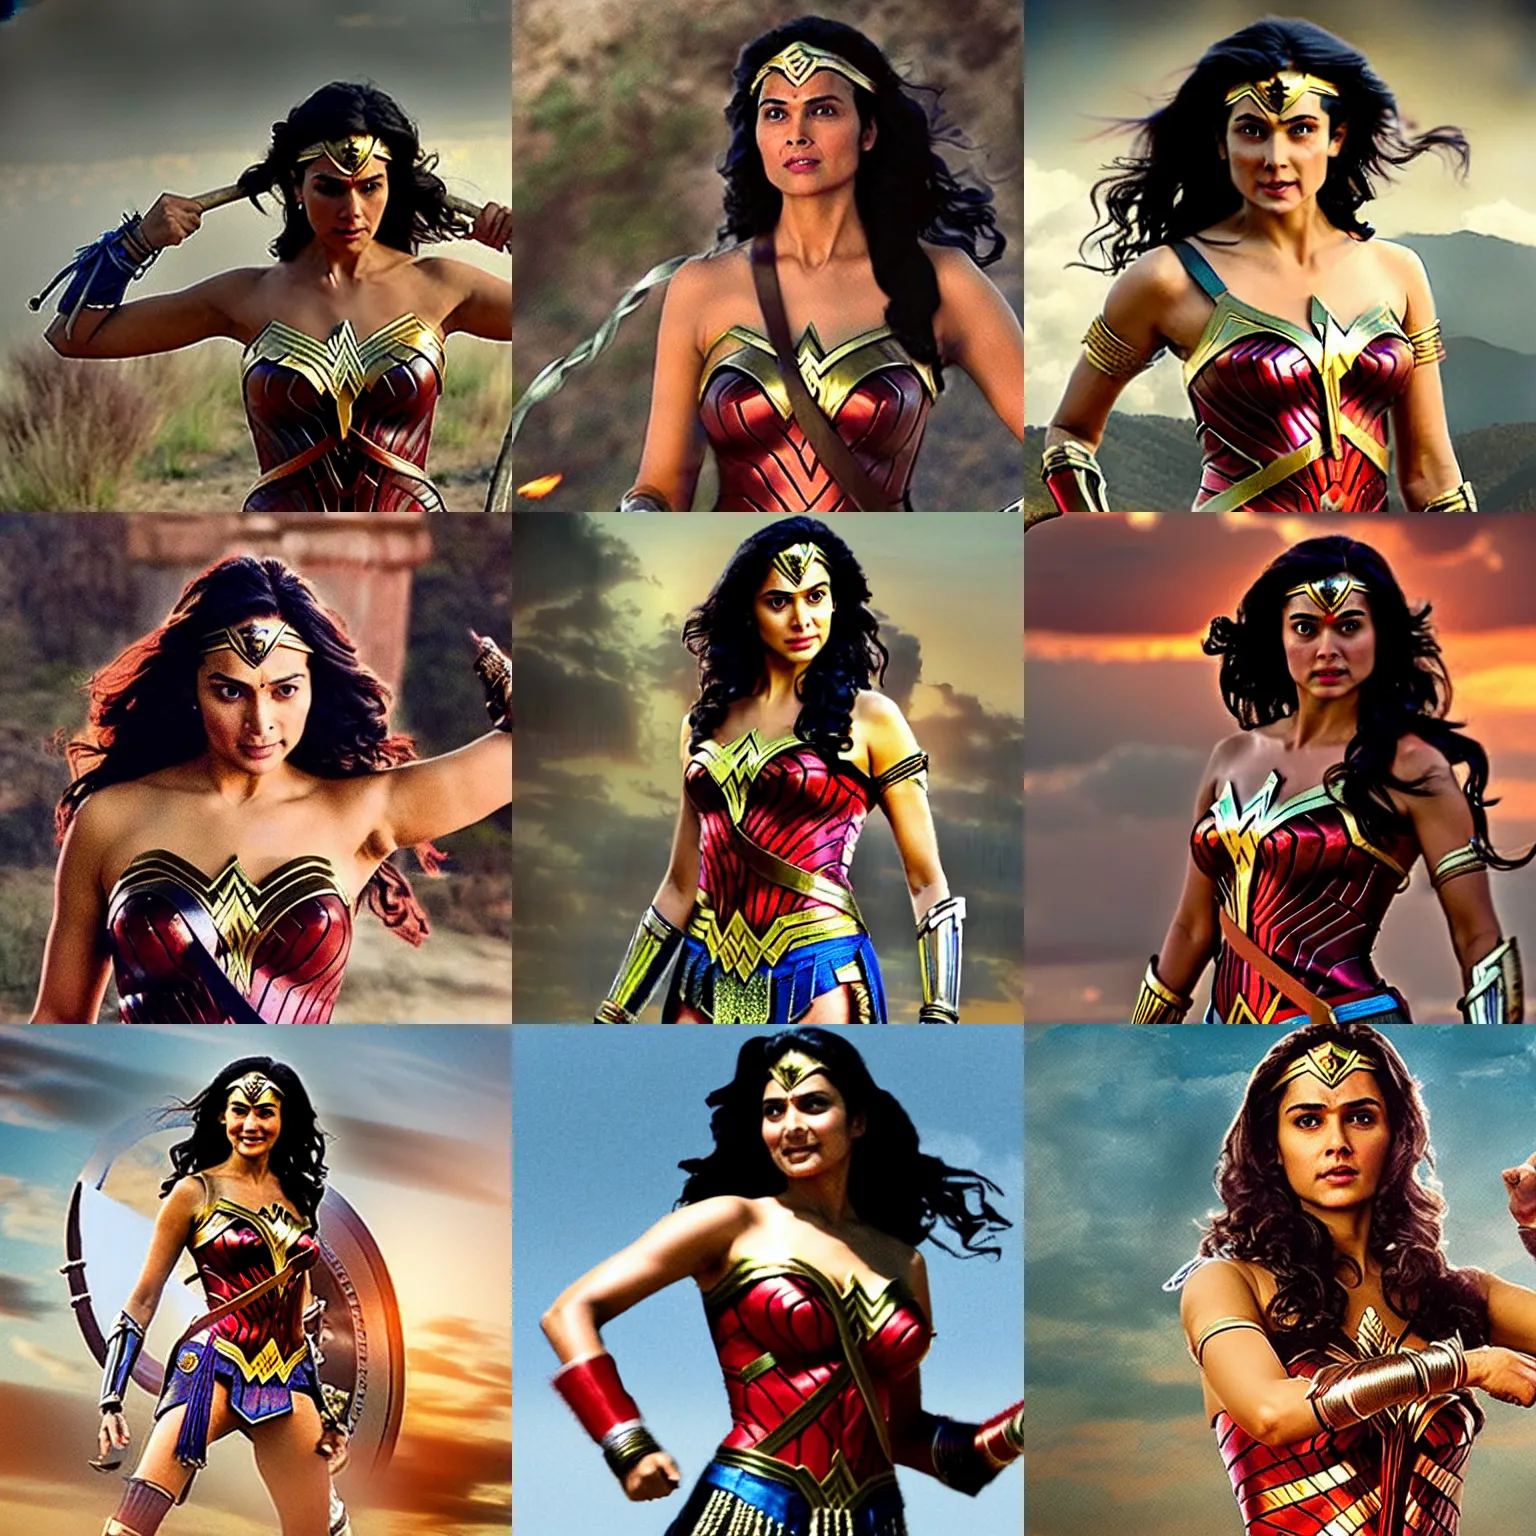 Prompt: An Indian Wonder Woman, film still from 'Wonder Woman'